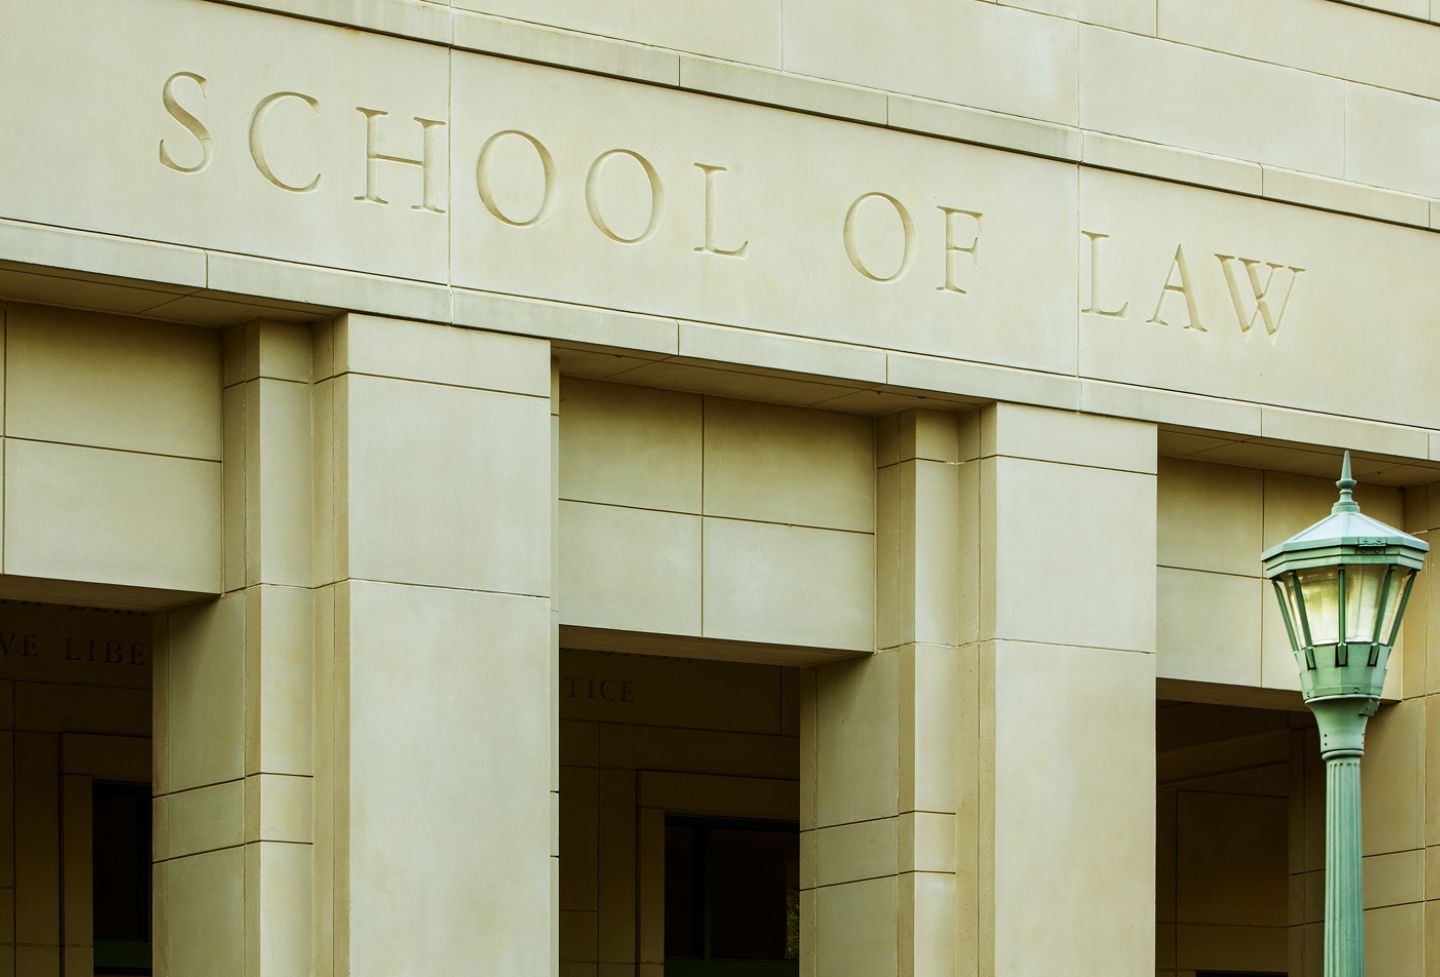 UVA Law School